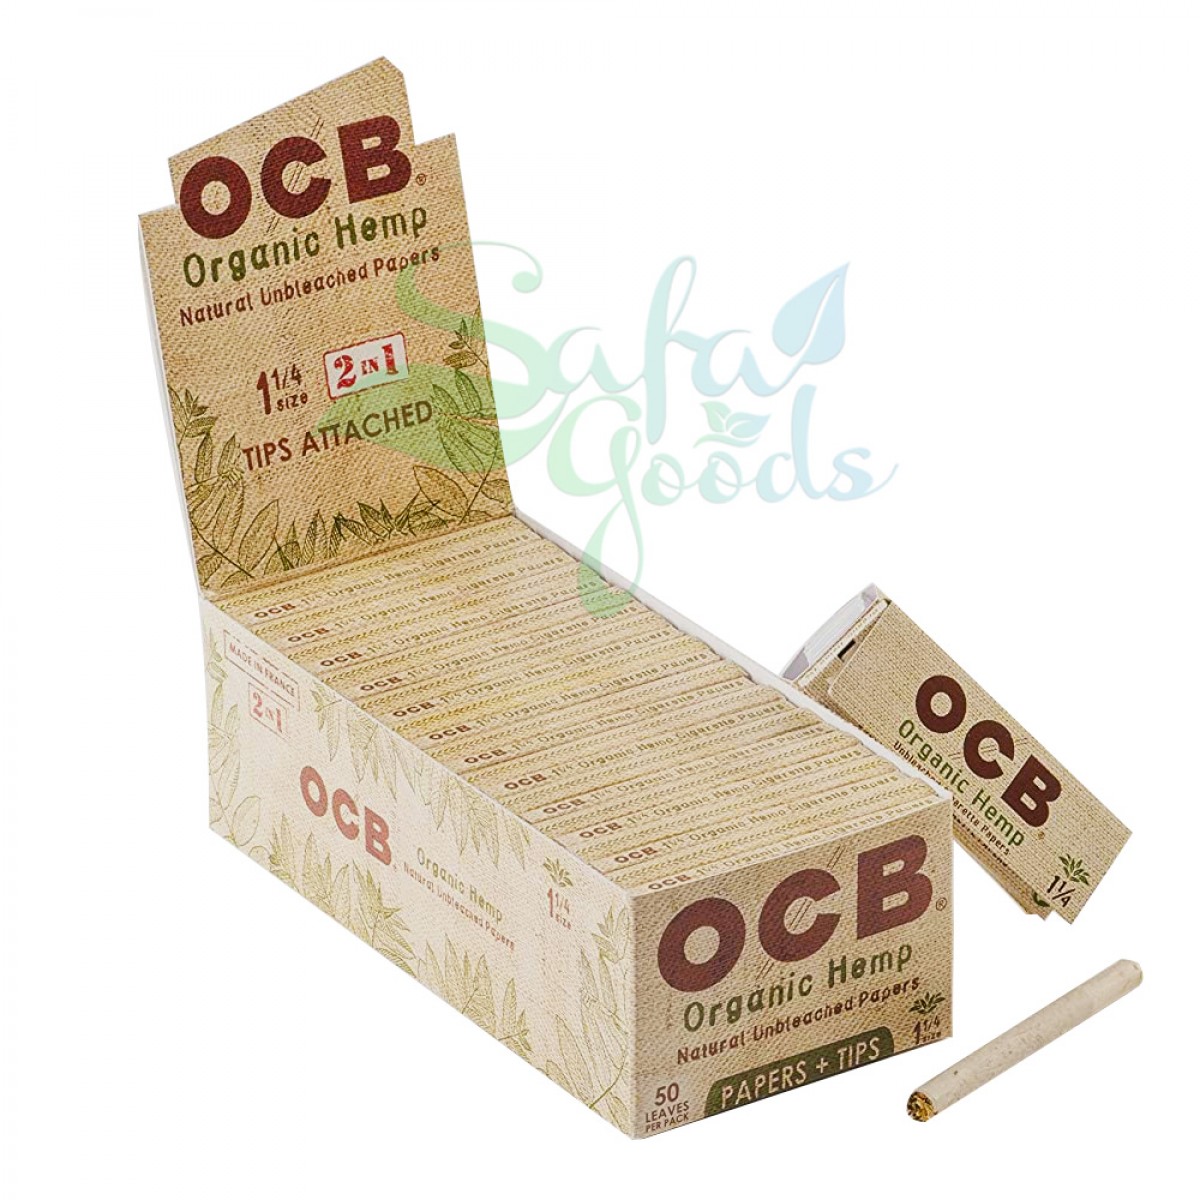 OCB Organic Hemp Rolling Papers with Tips 24CT Display Box